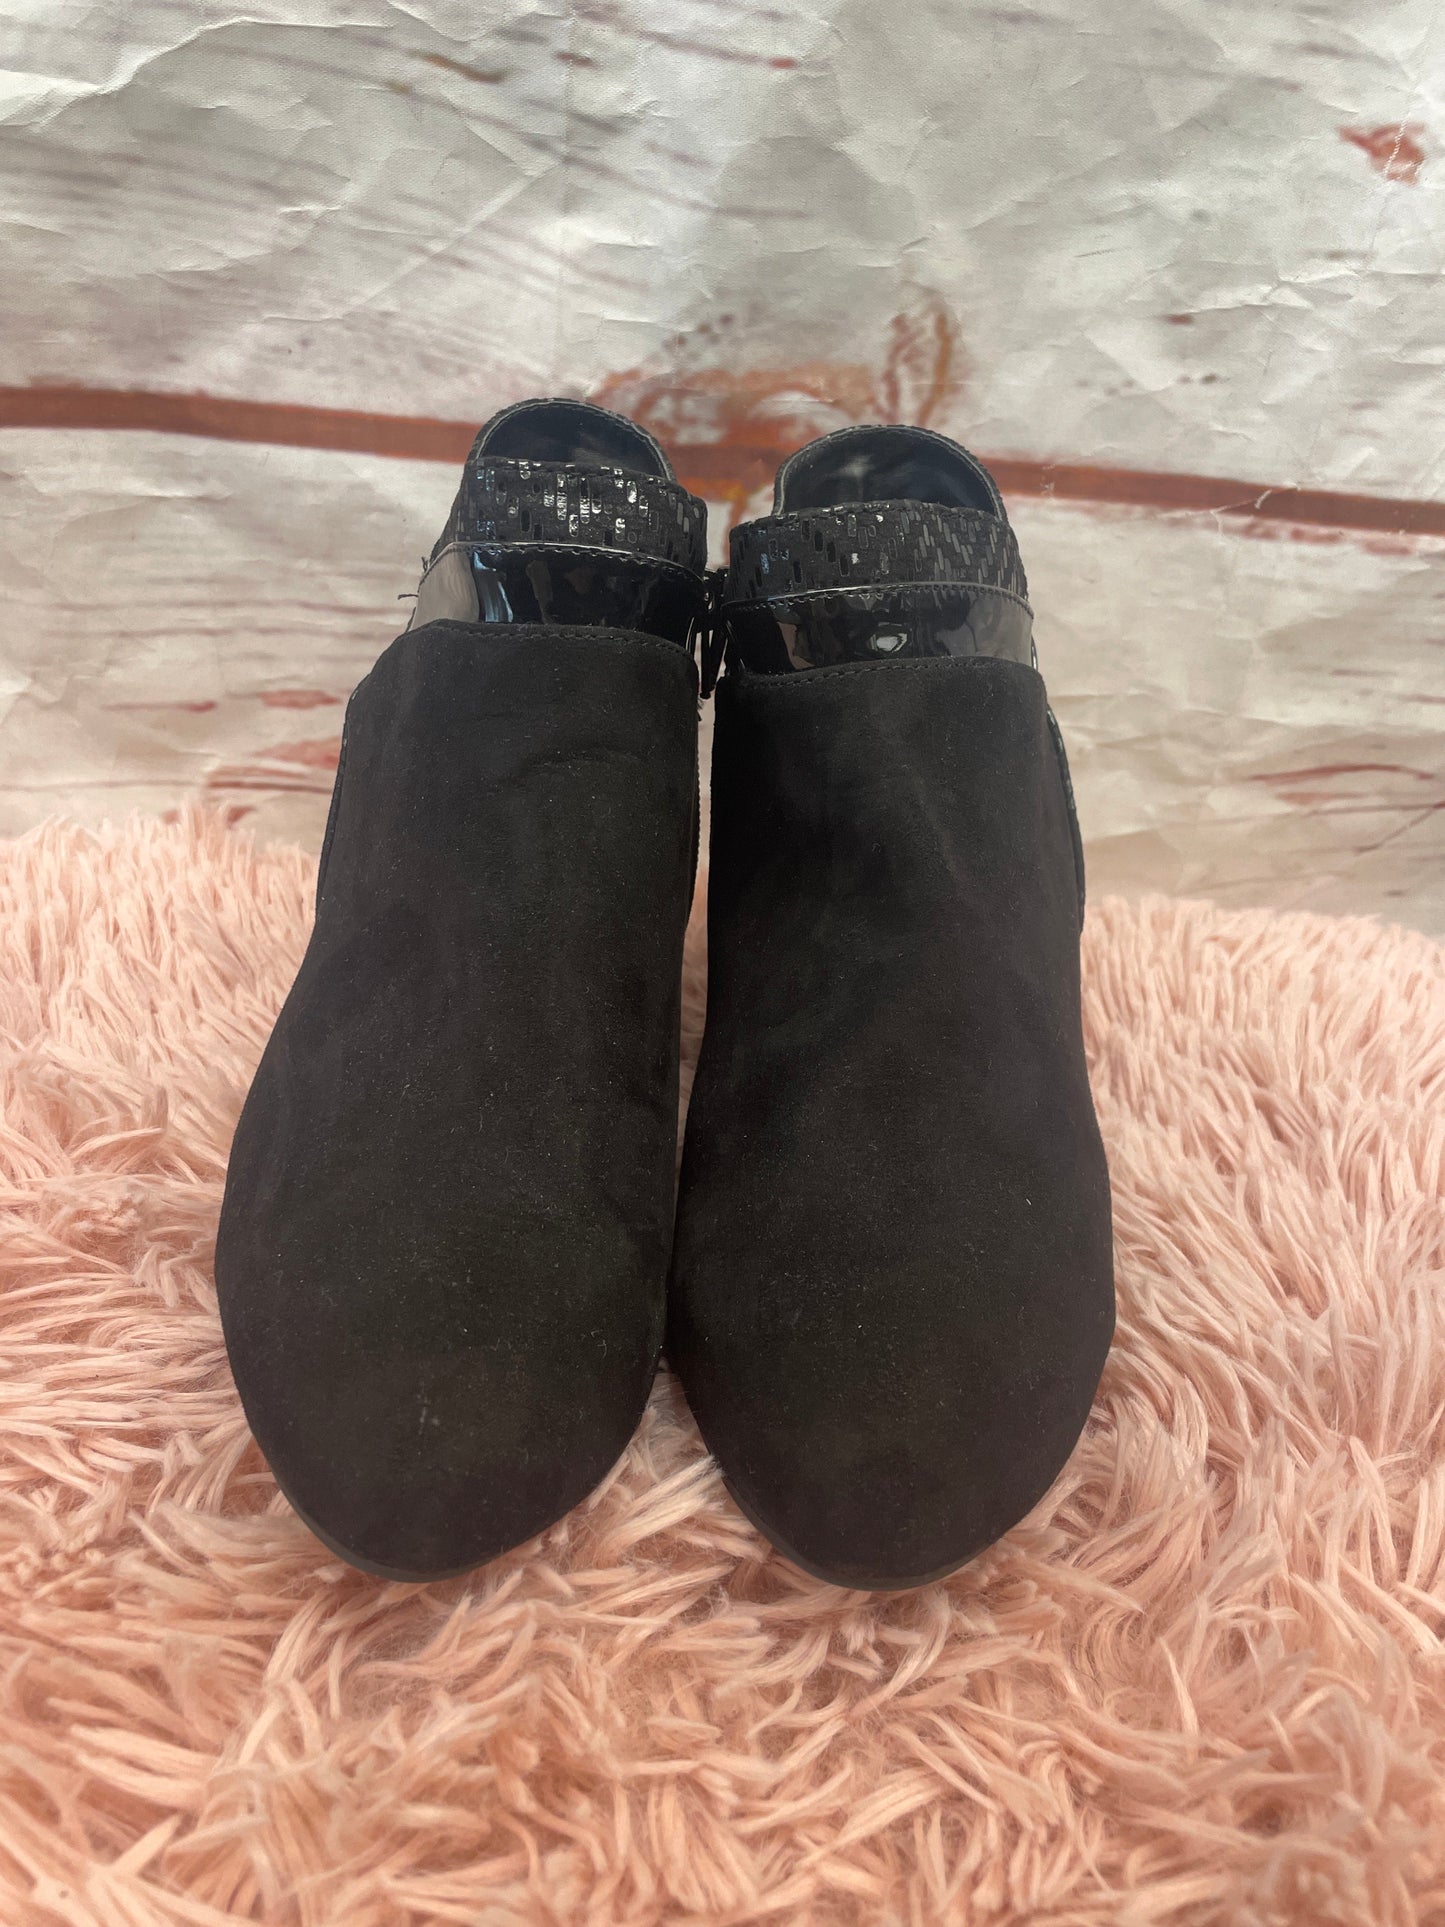 Boots Ankle Heels By Karen Scott  Size: 7.5